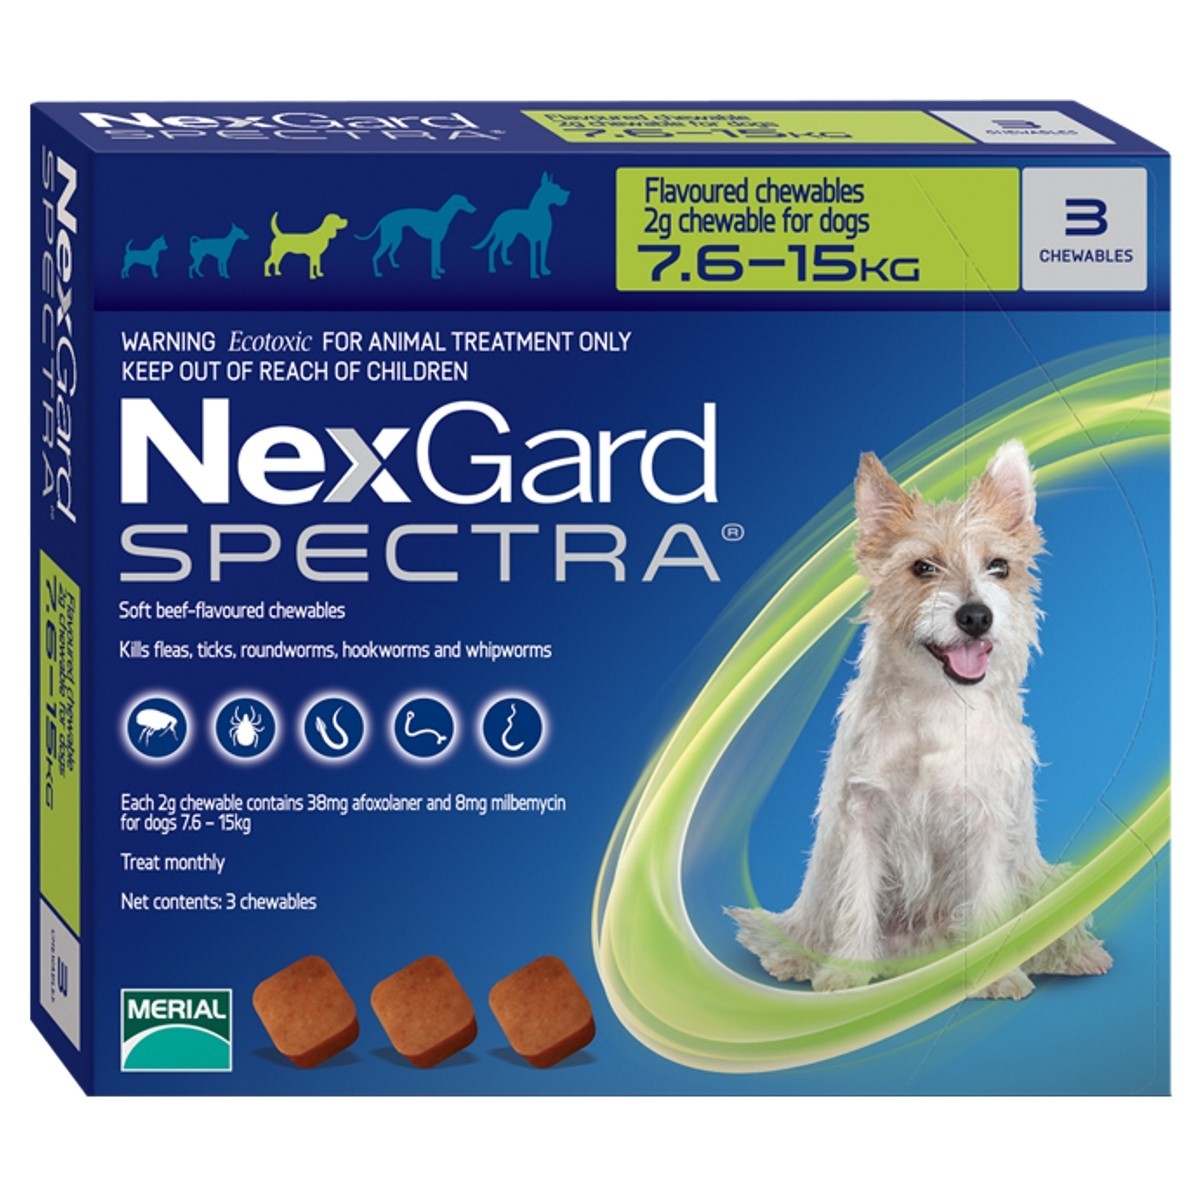 nexgard spectra small dog 3 pack